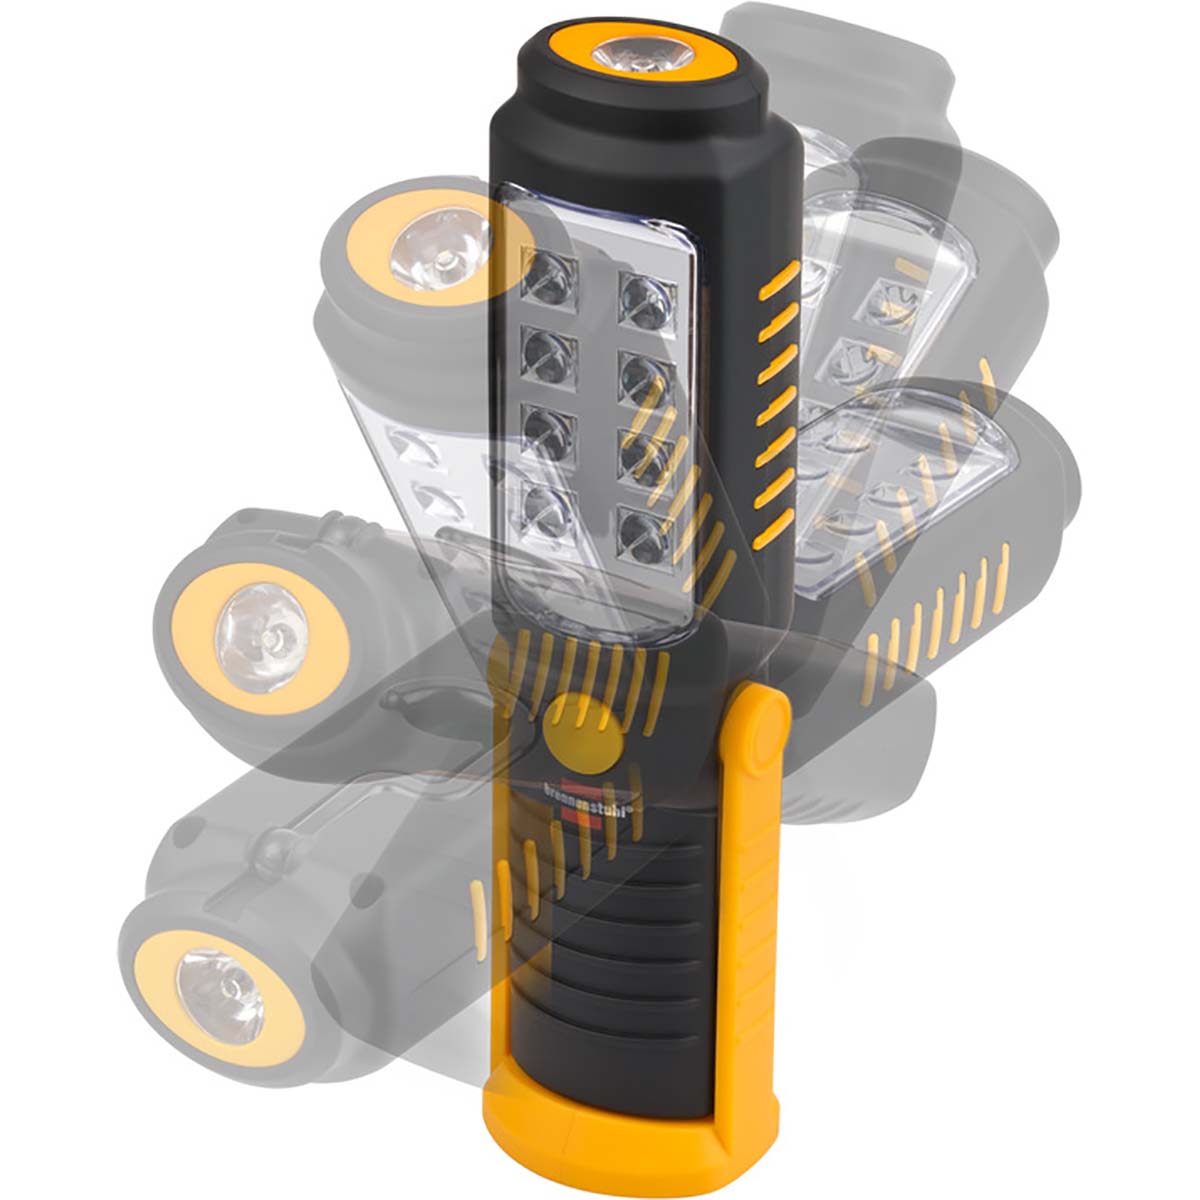 Tragbare Inspektions-LED-Leuchte mit 8 + 1 hellen SMD-LEDs (batteriebetrieben, max. 10 Stunden Leuchtdauer, drehbarer Haken, Magnet)